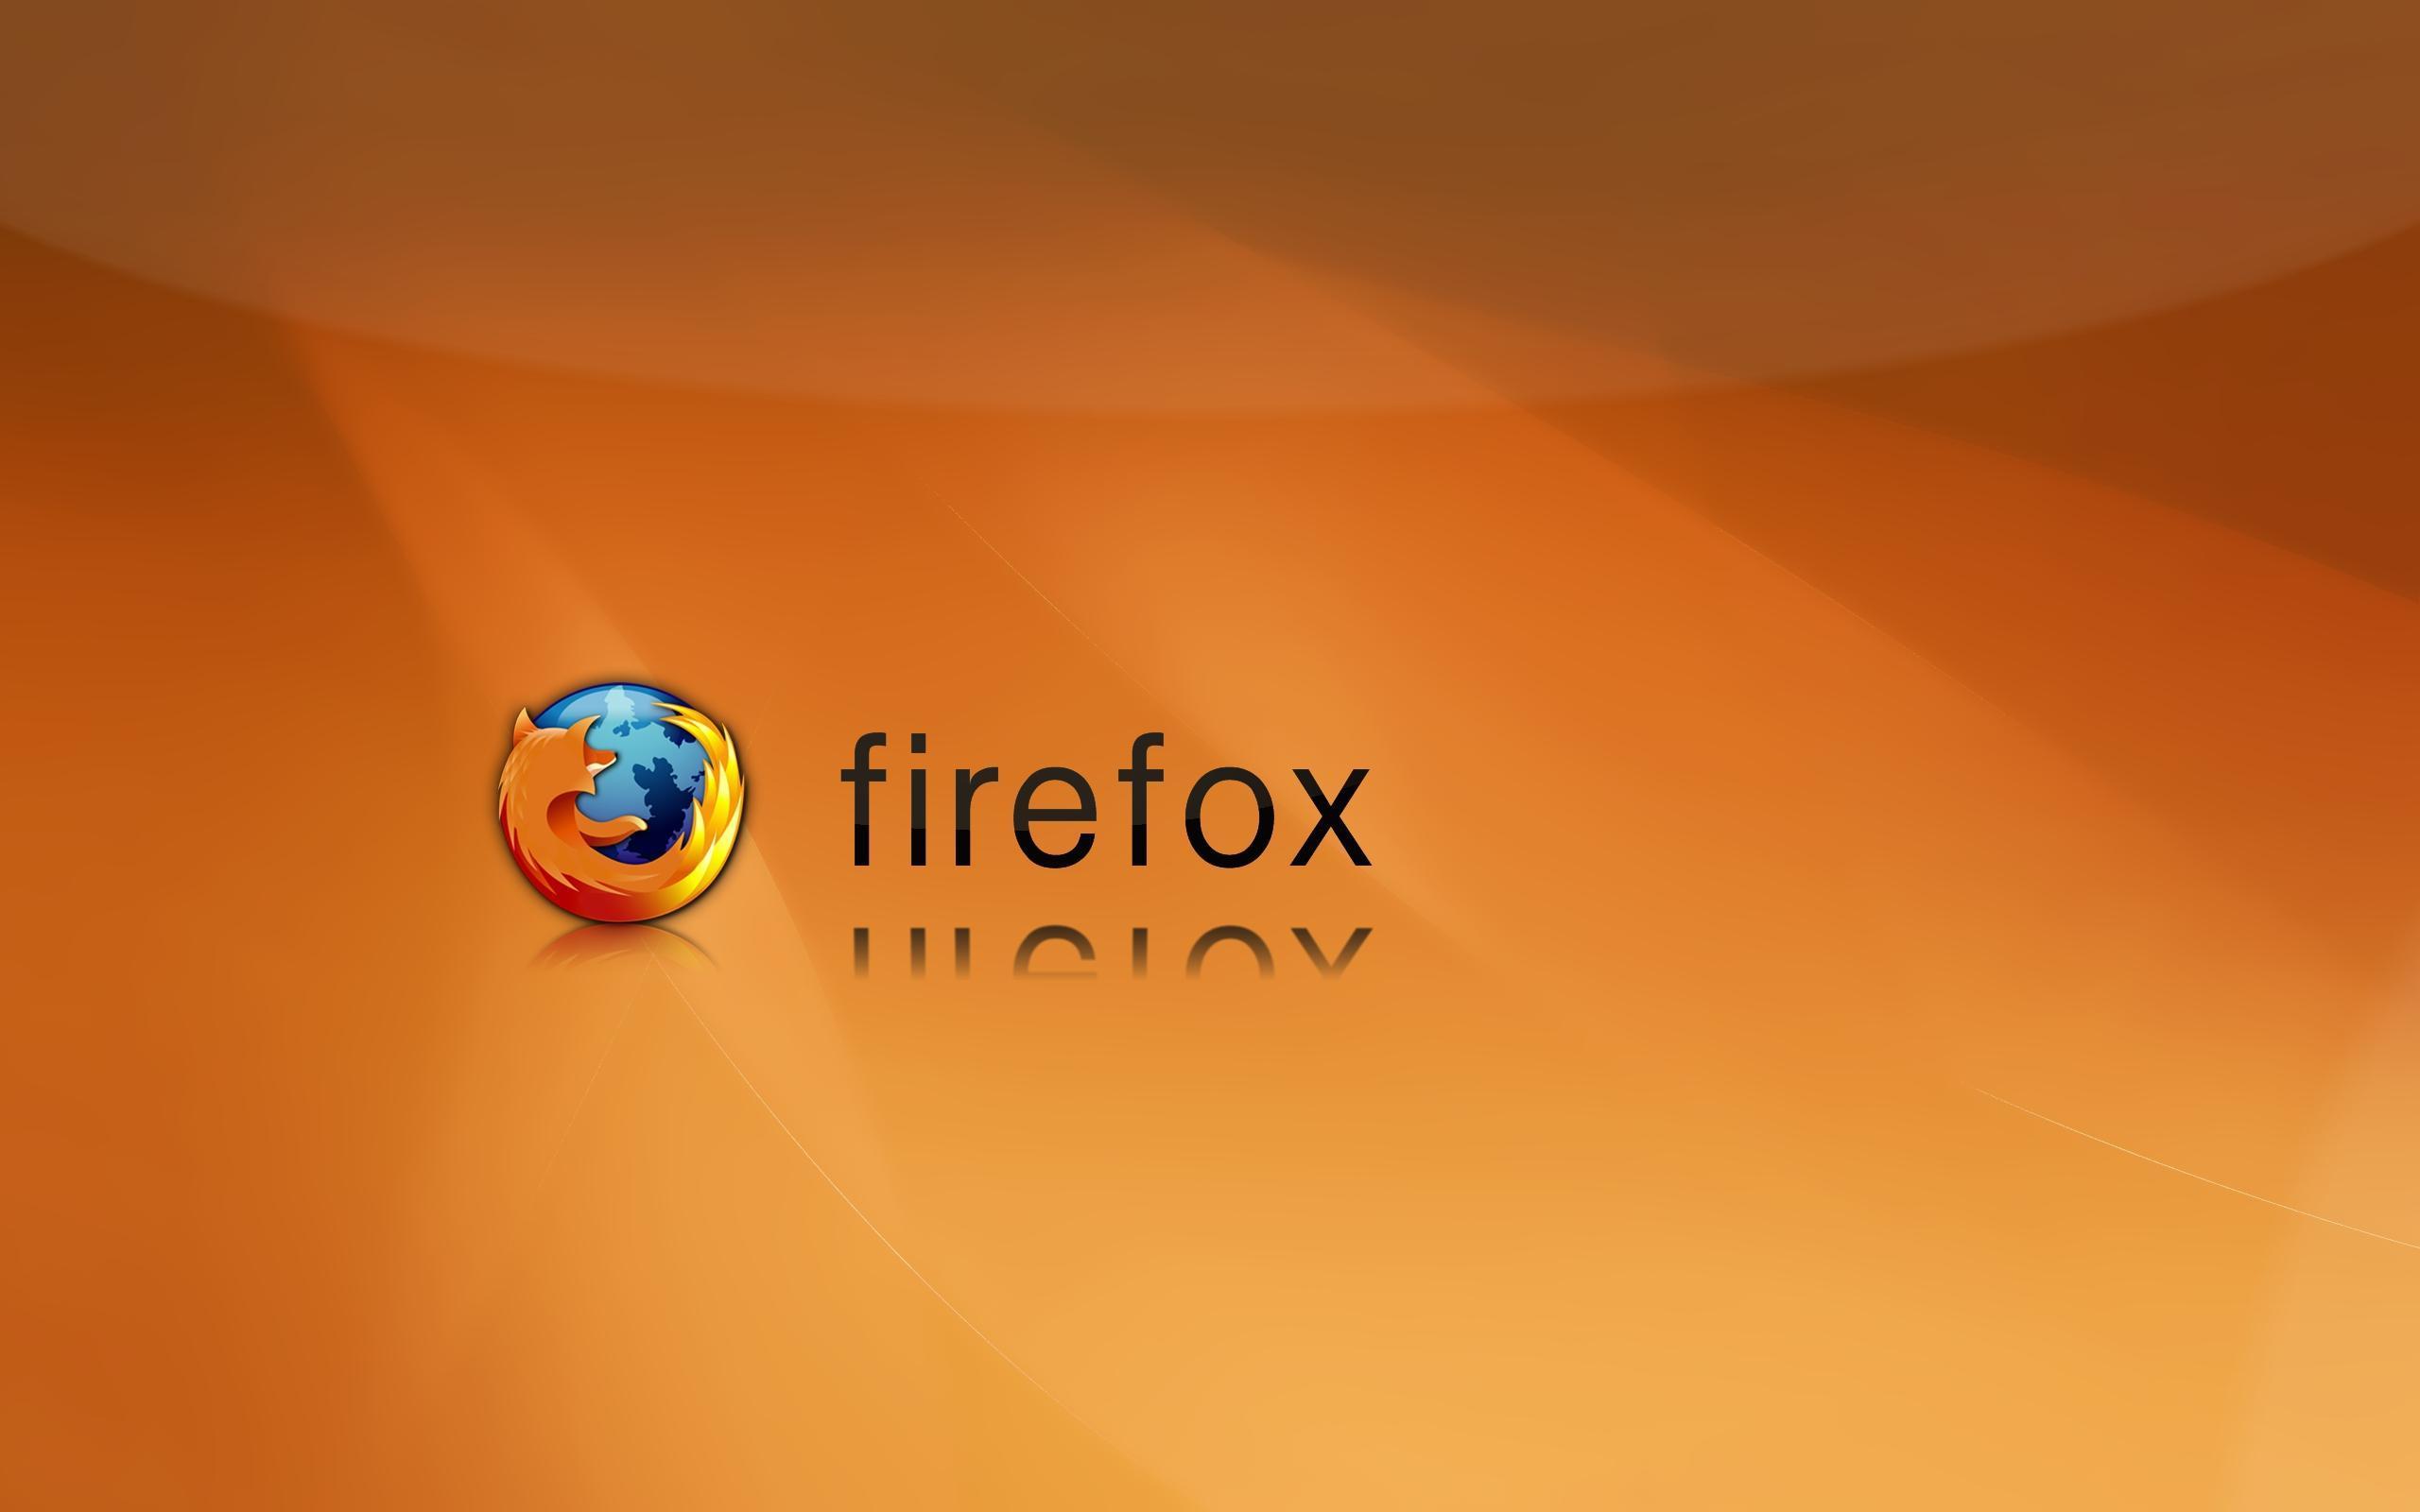 Firefox Background wallpaper